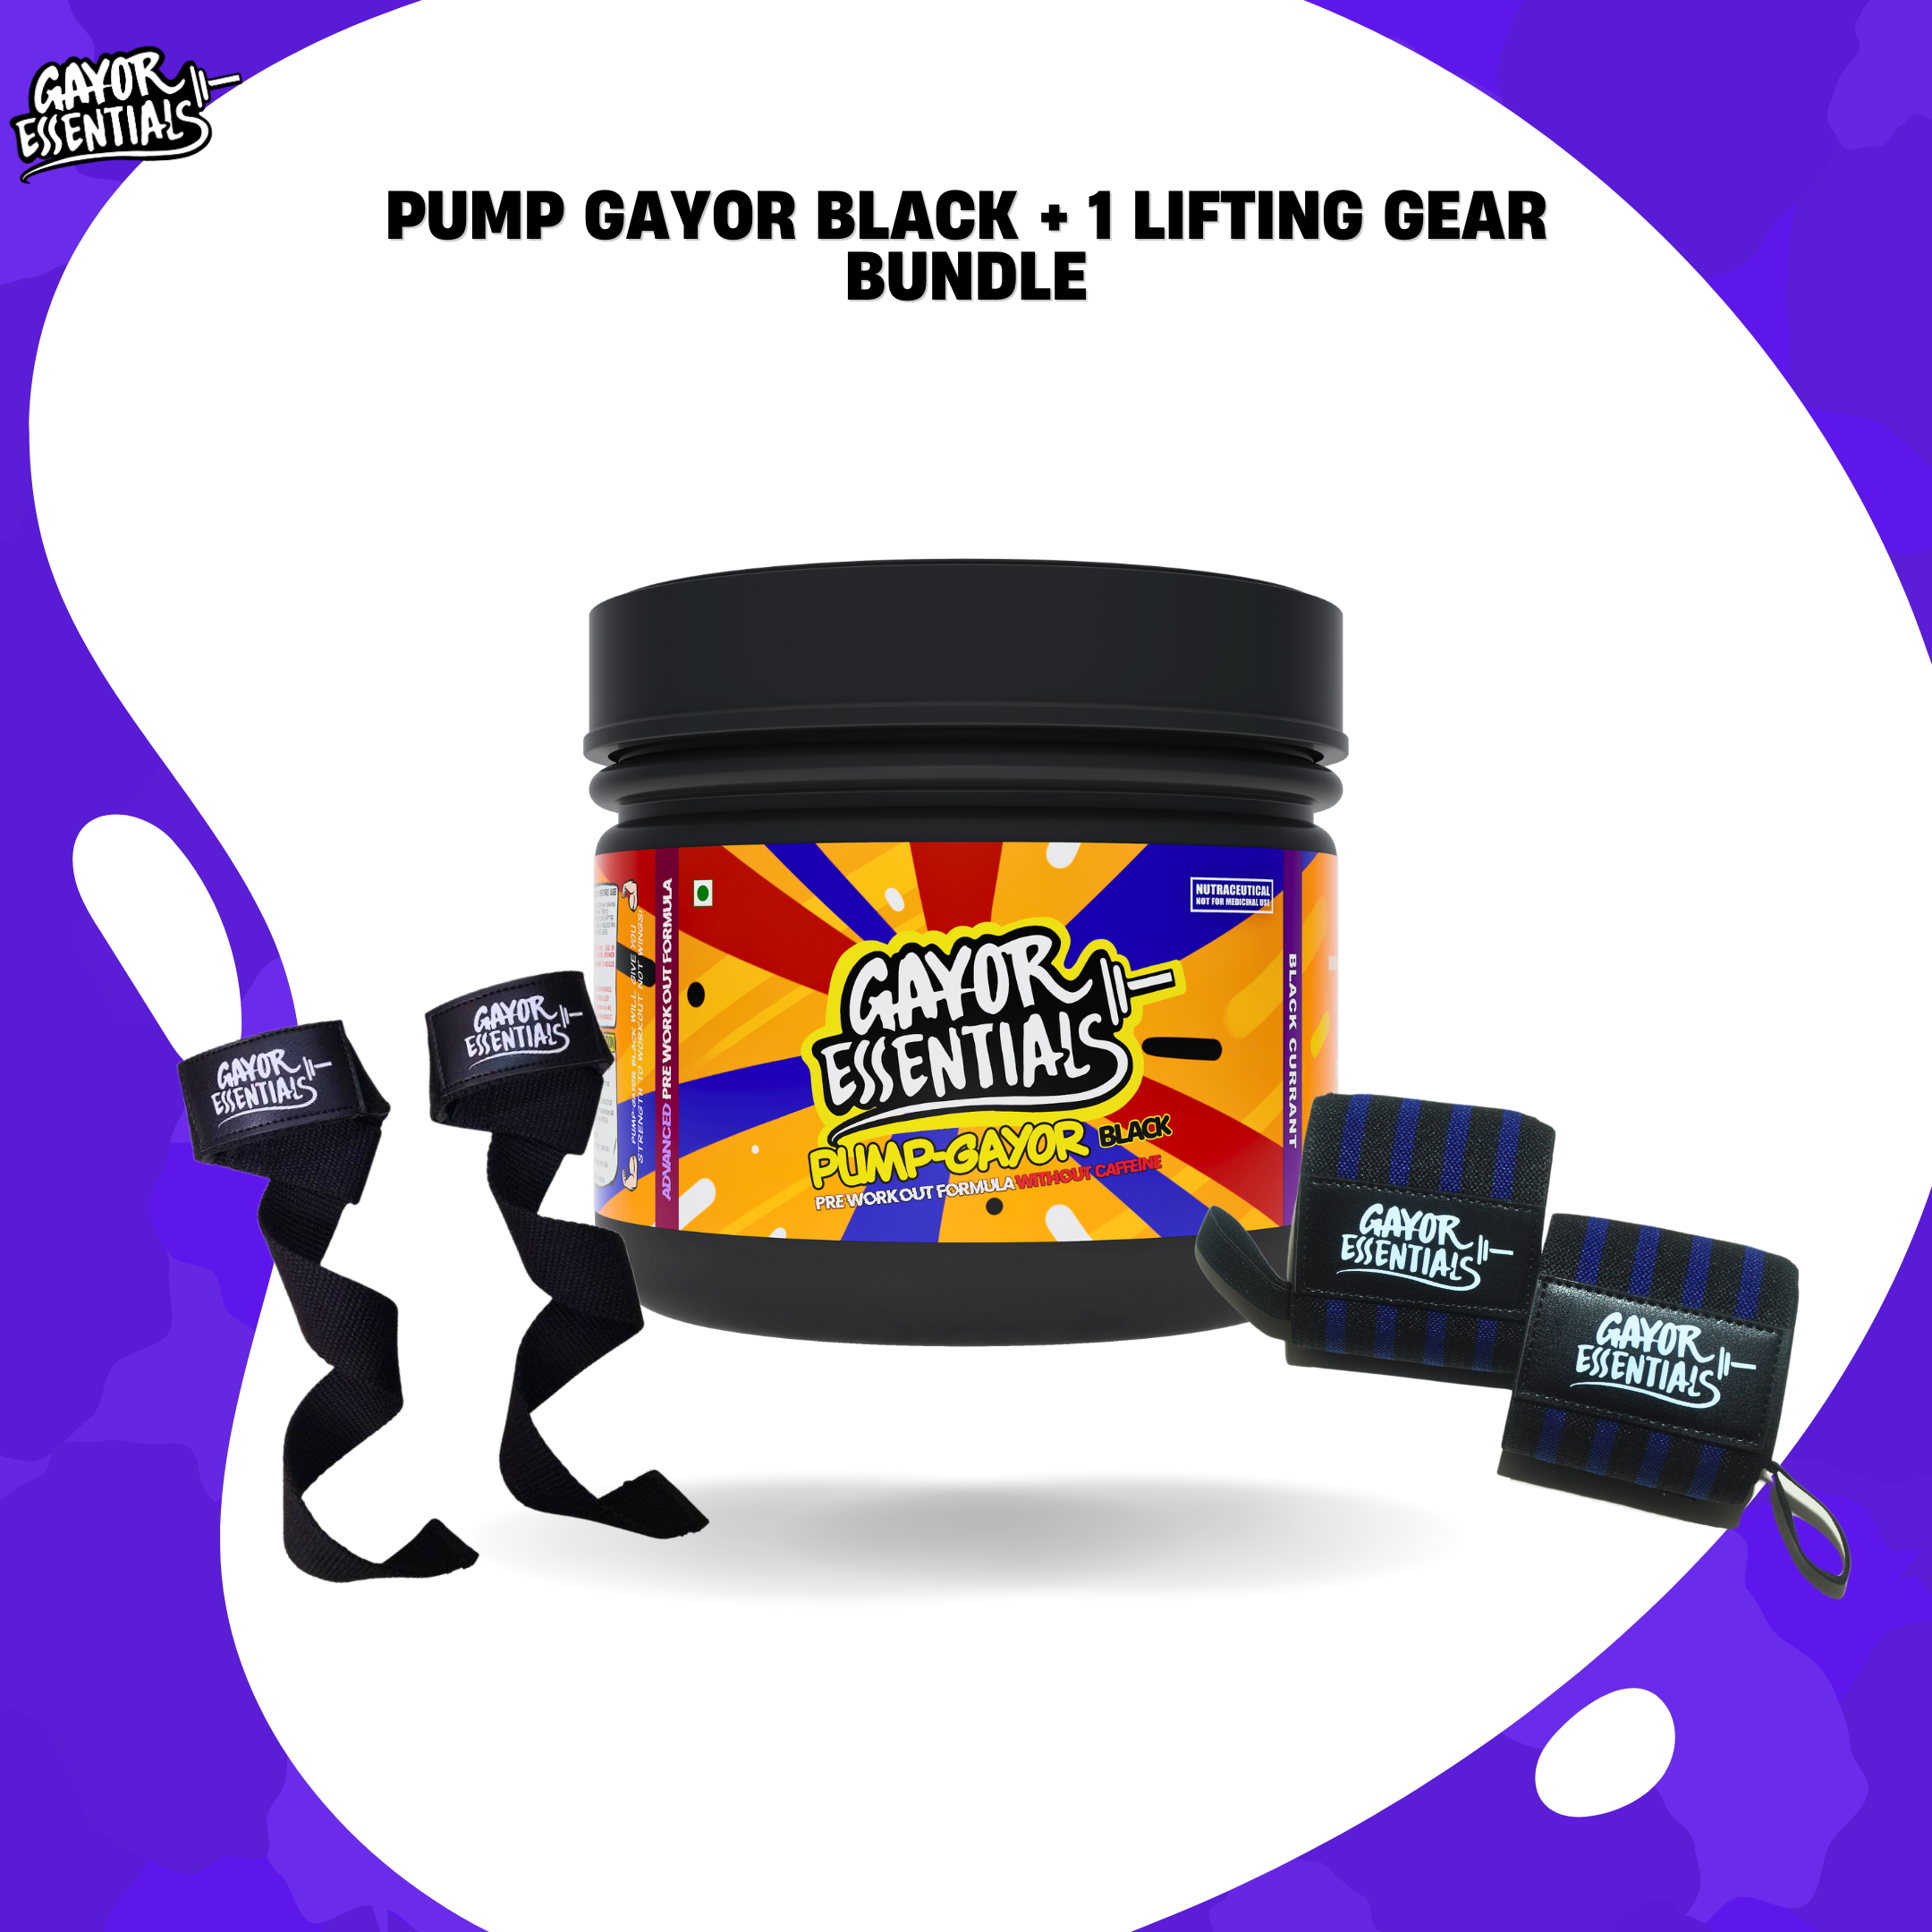 Pump Gayor Black (without caffeine) + Lifting Gear Bundle